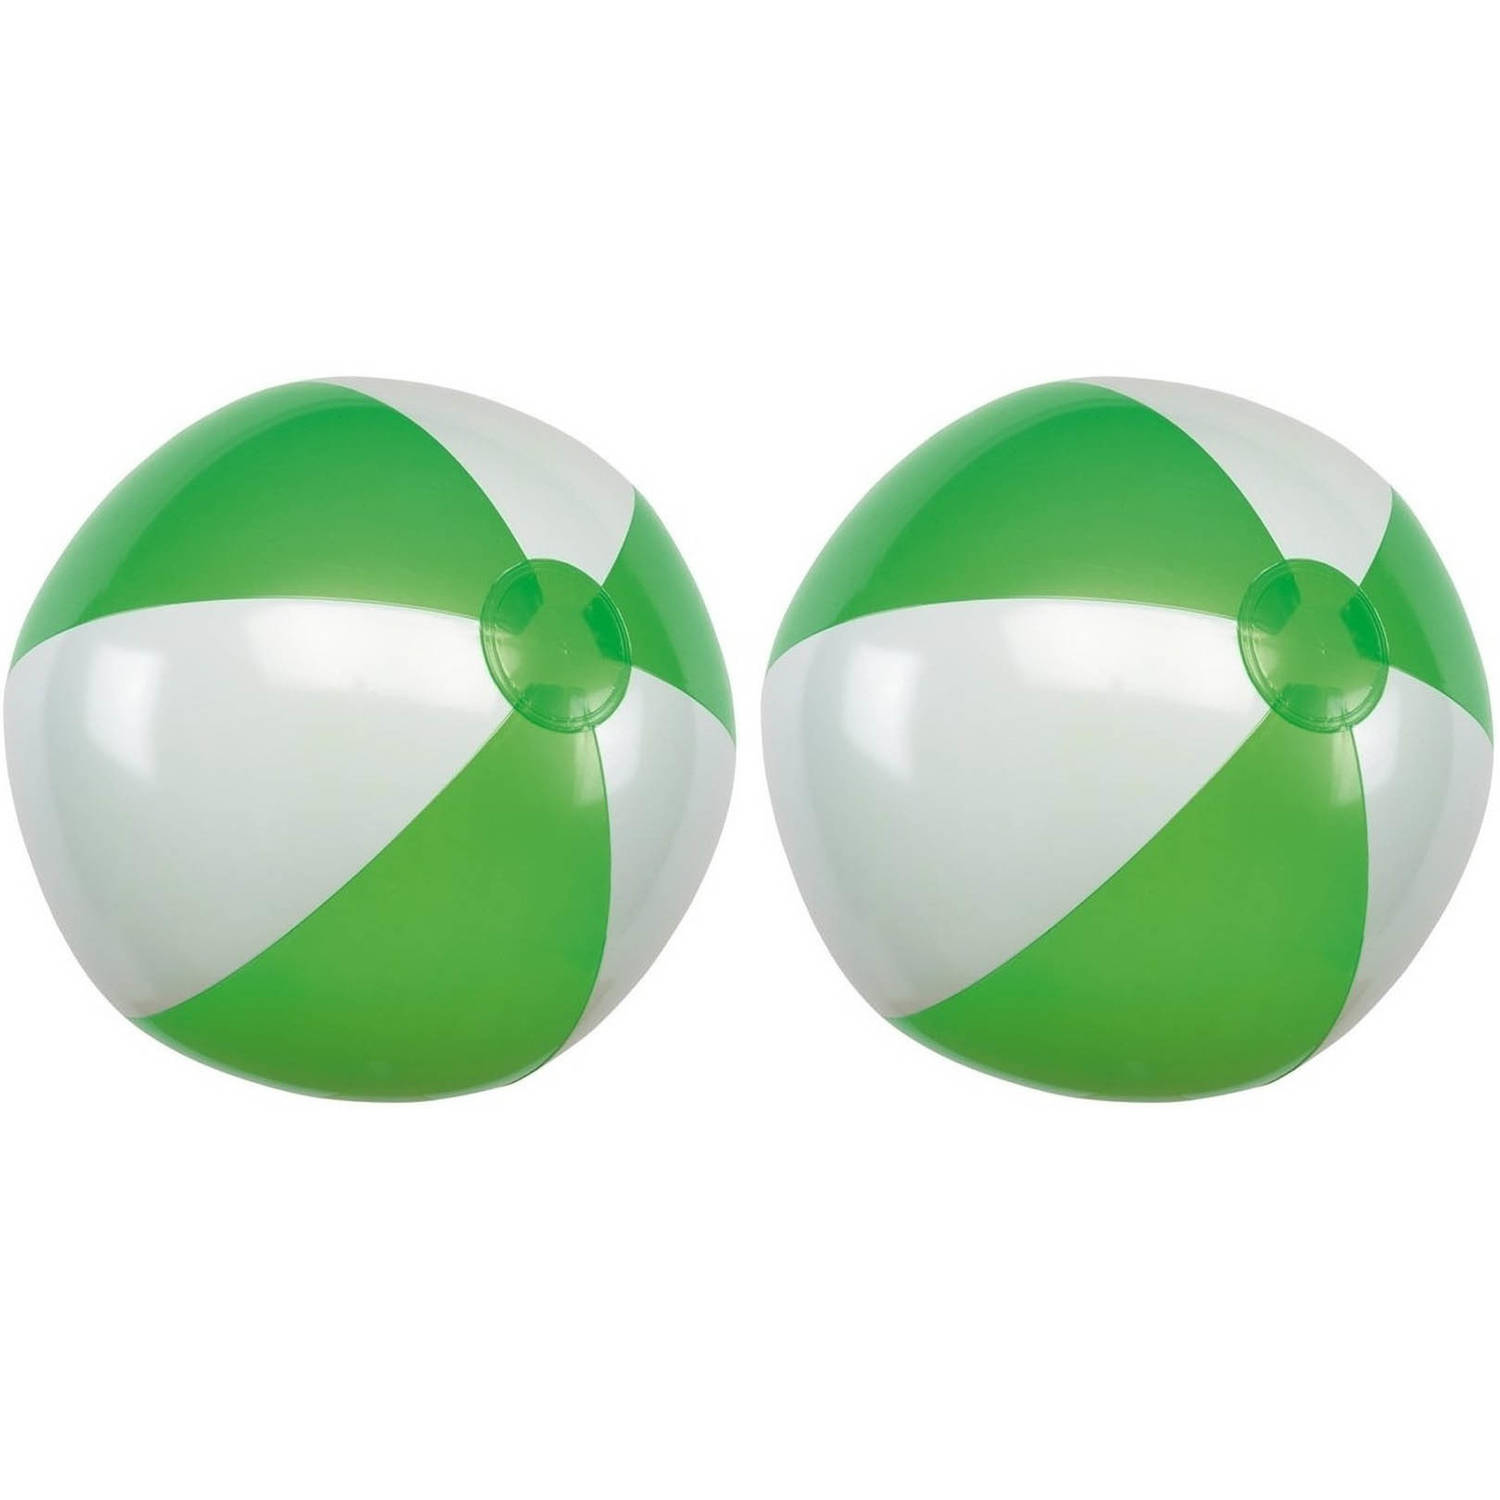 2x Opblaasbare Strandballen Groen-wit 28 Cm Speelgoed Strandballen